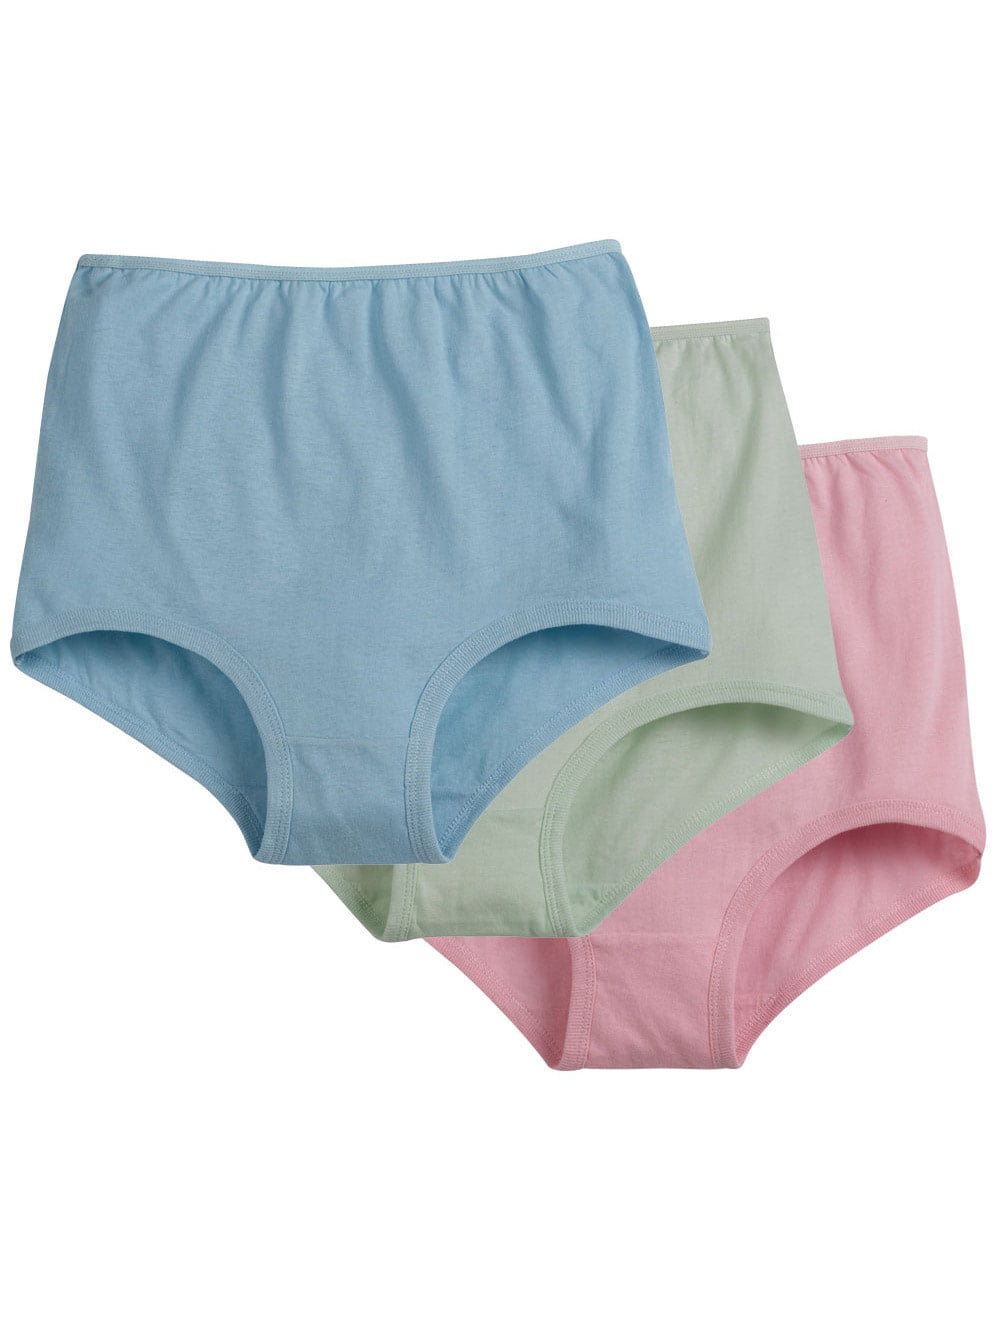 6 Ladies Full Mama 100% Cotton Briefs Knickers Underwear All Sizes 